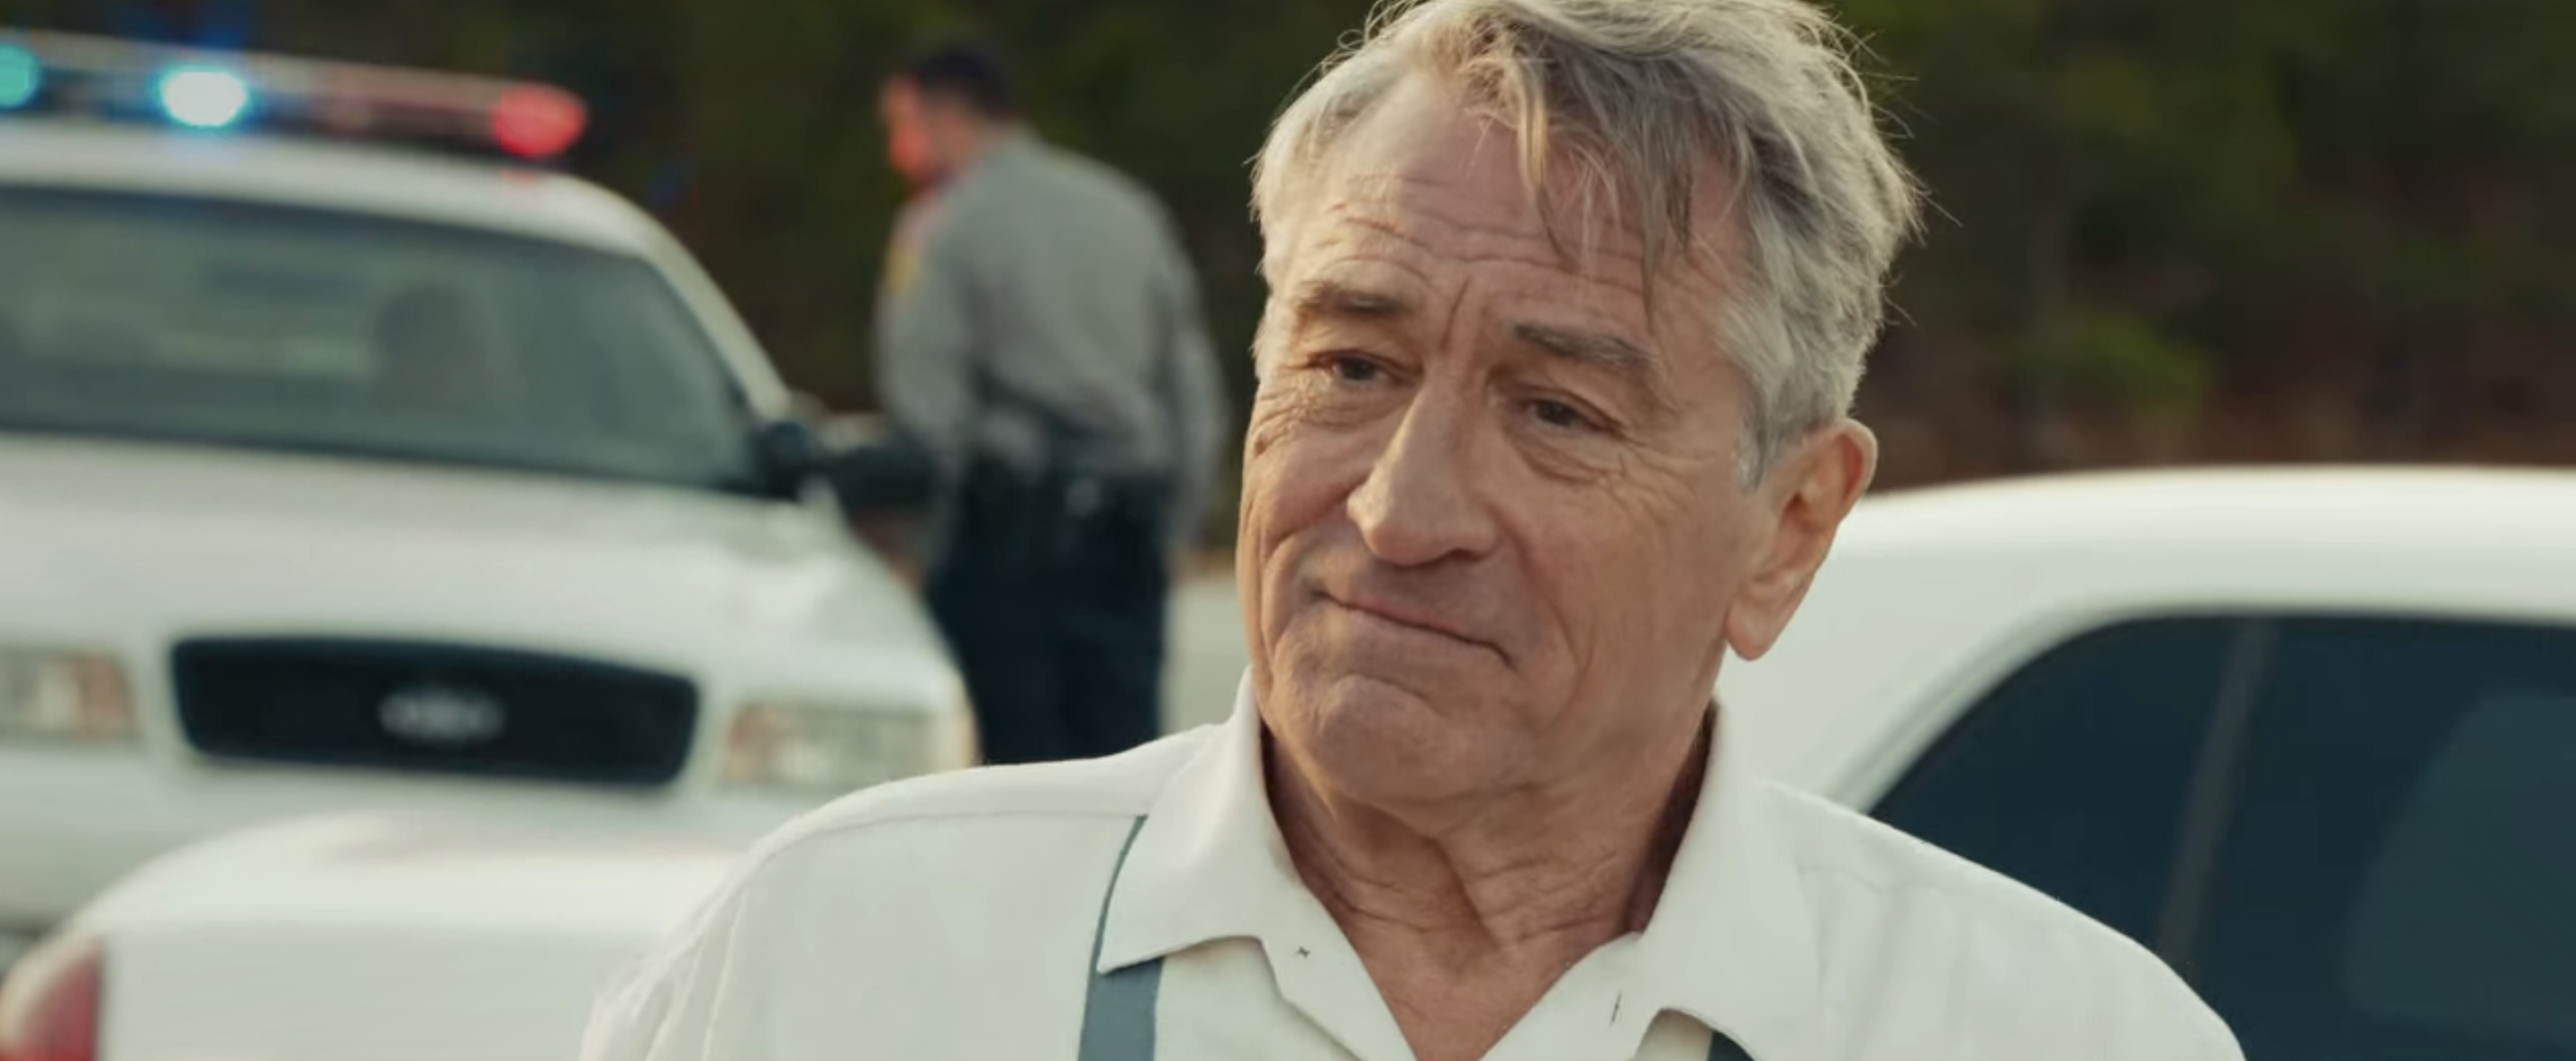 Dirty Grandpa Cast on Netflix - Robert De Niro as Dick Kelly